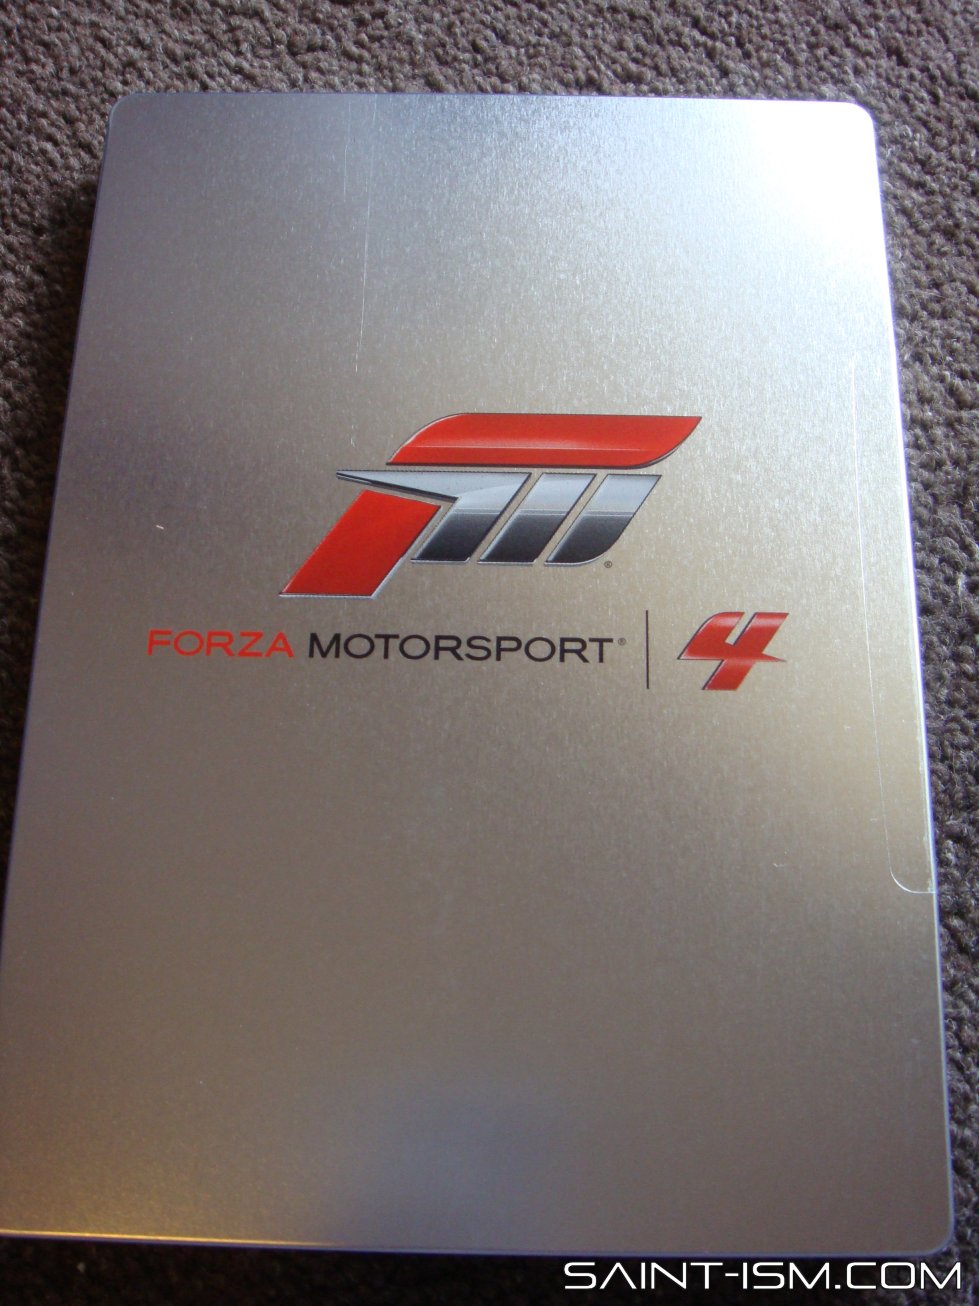 Forza Horizon 4 Collectors Steelbook Edition+Digital Game FOR